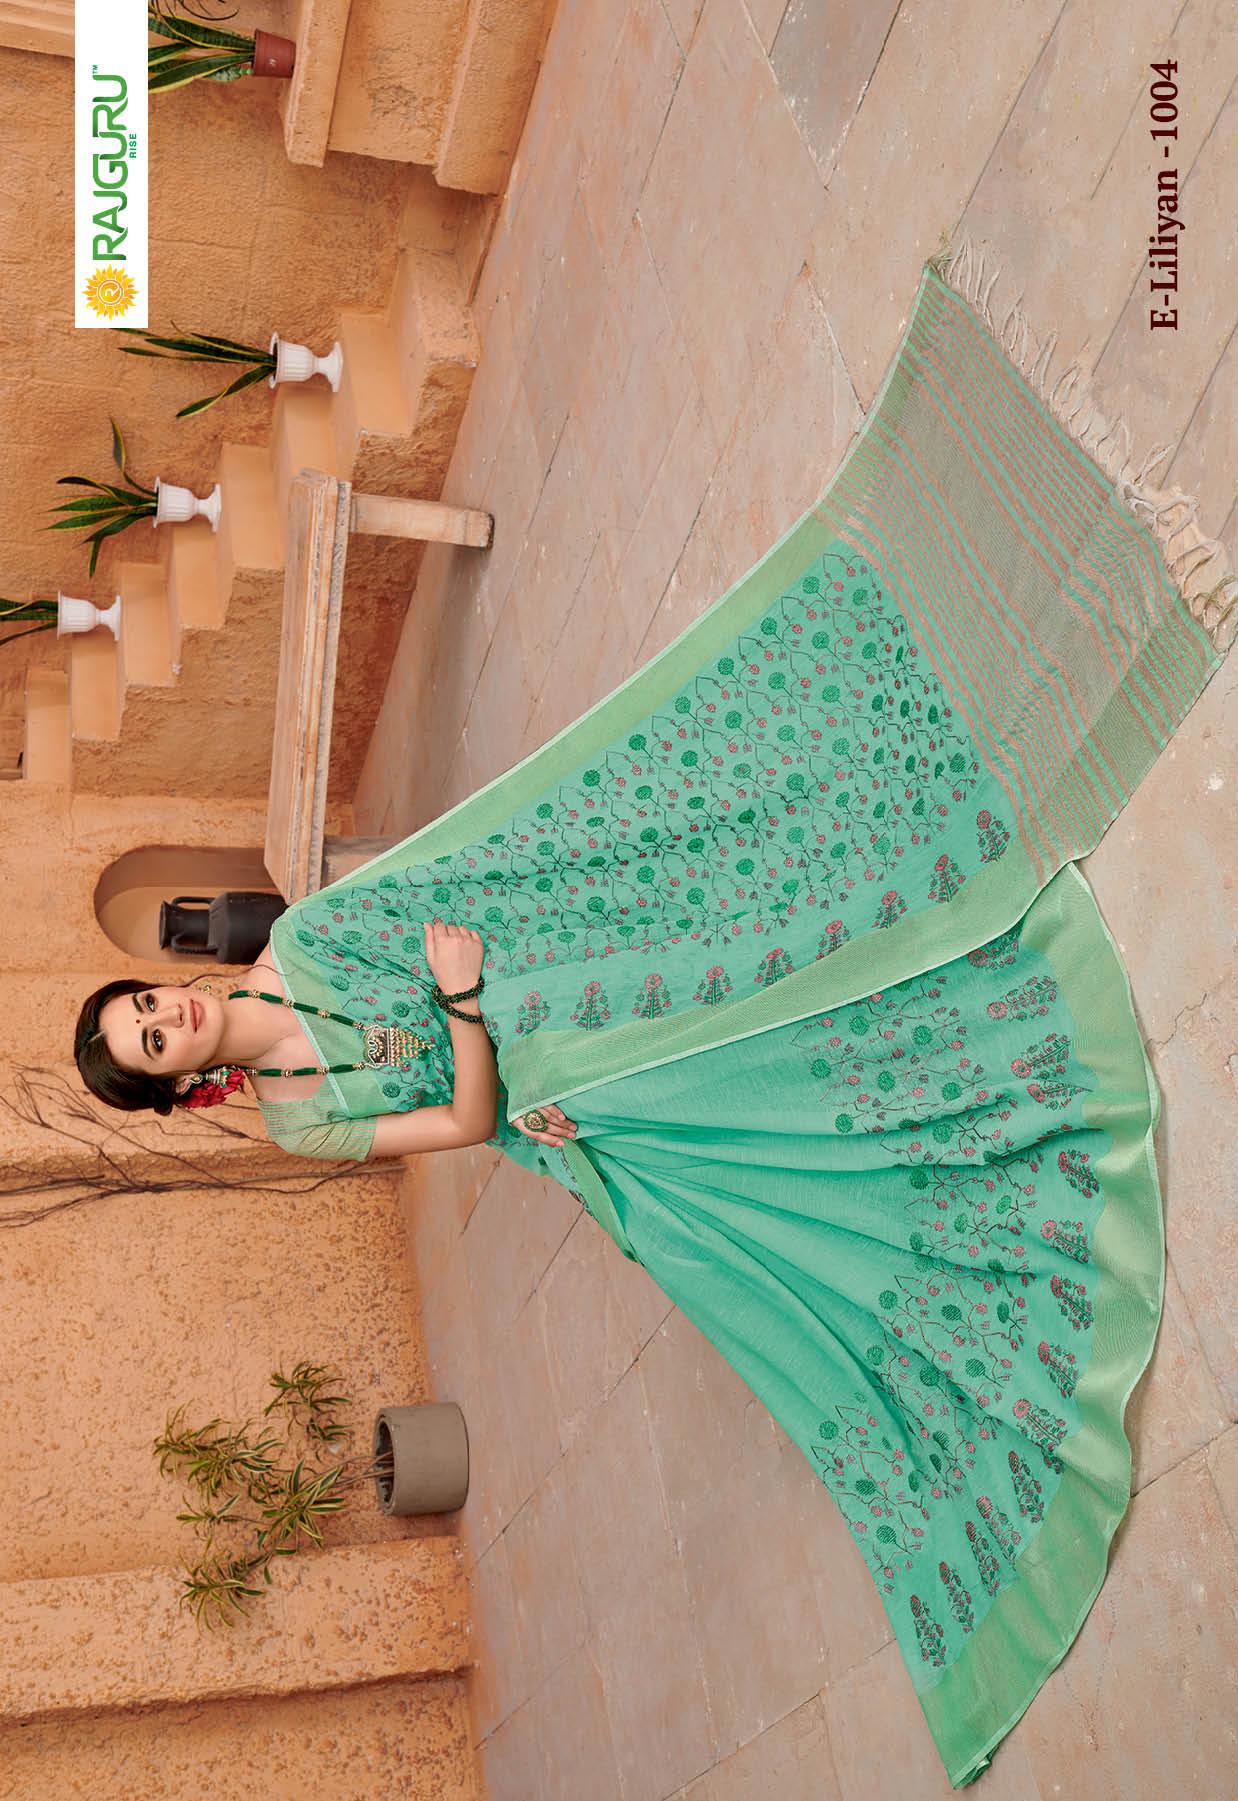 Rajguru Presents Liliyan Beautiful Designer Pure Lilen Silk With Embroidery Work Sarees Catalog Wholesaler